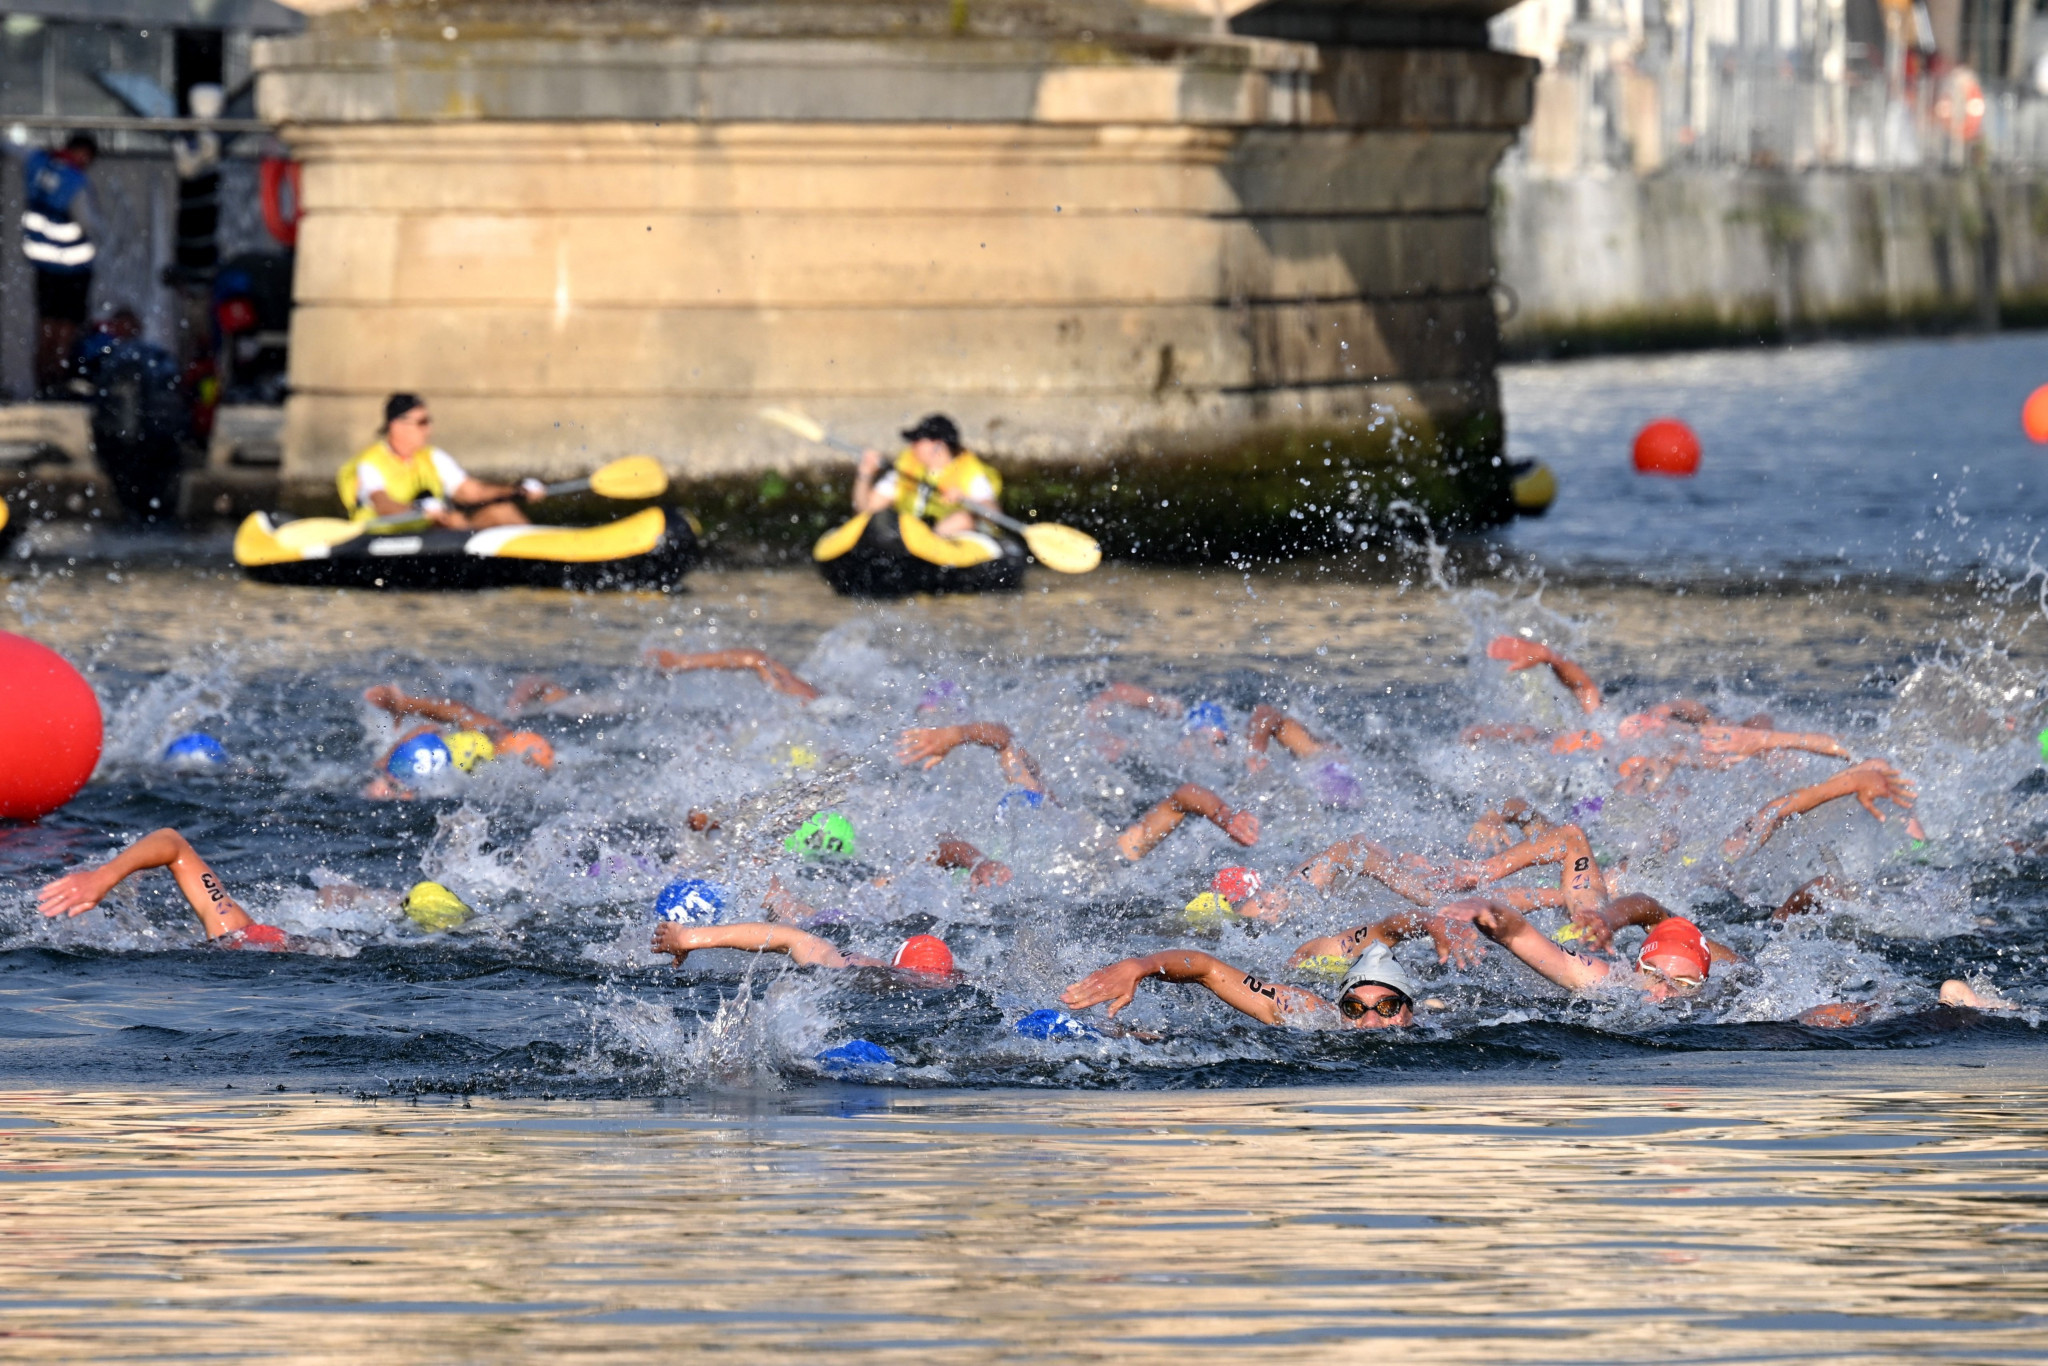 World Triathlon refuses to use Seine for Paris 2024 test event as probe begins into data "discrepancy"